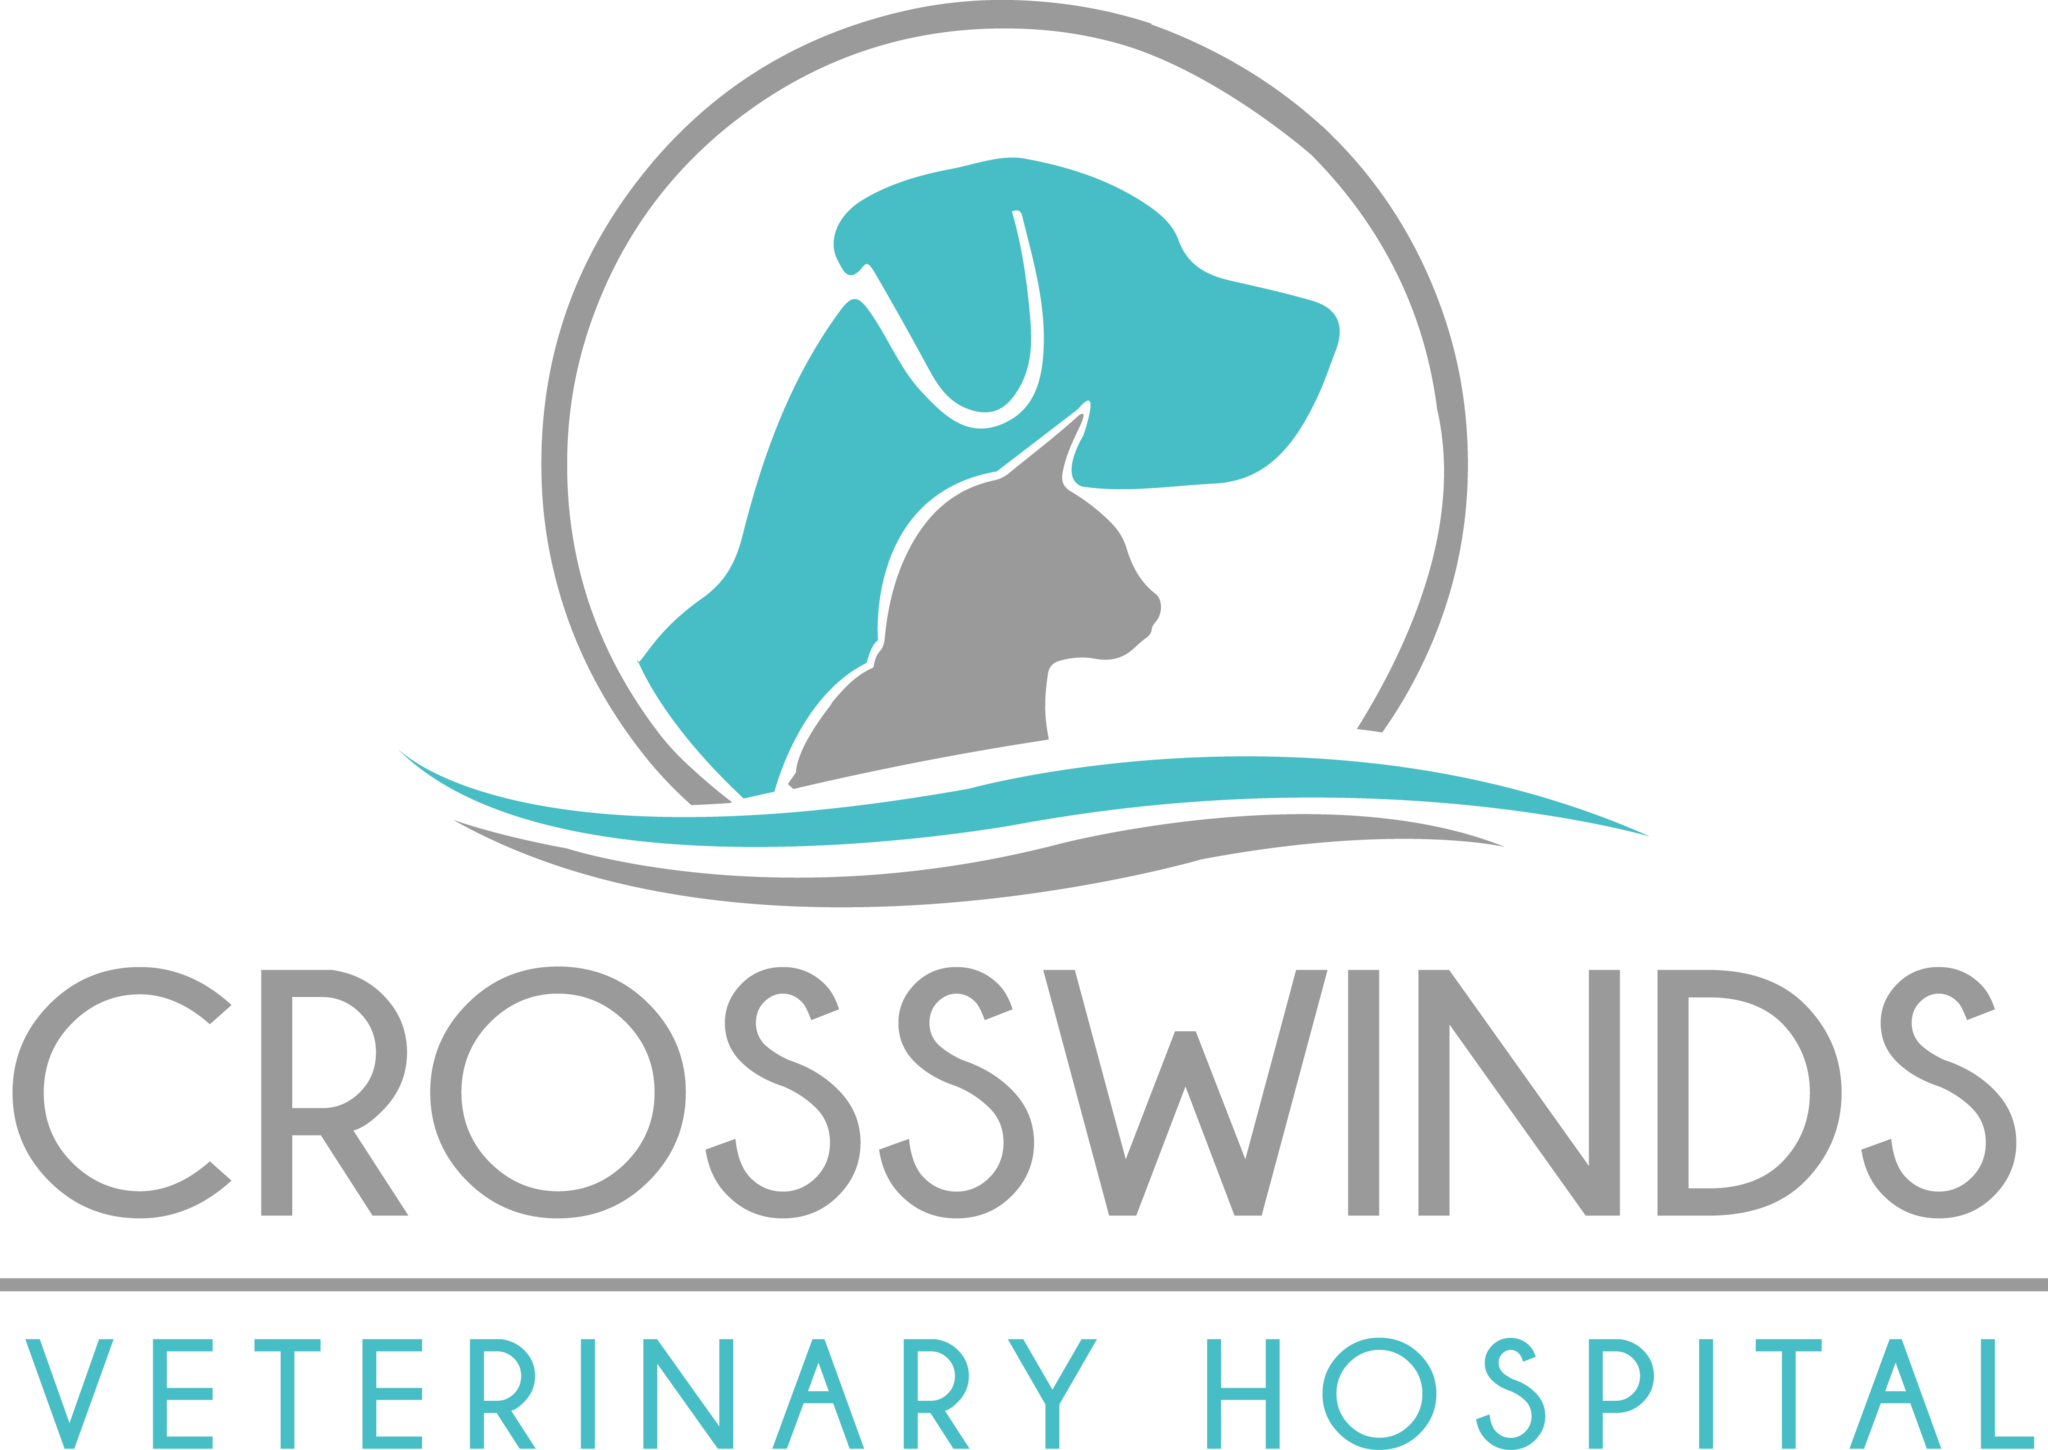 Crosswinds Veterinary Hospital - Saint Johns, FL - Nextdoor